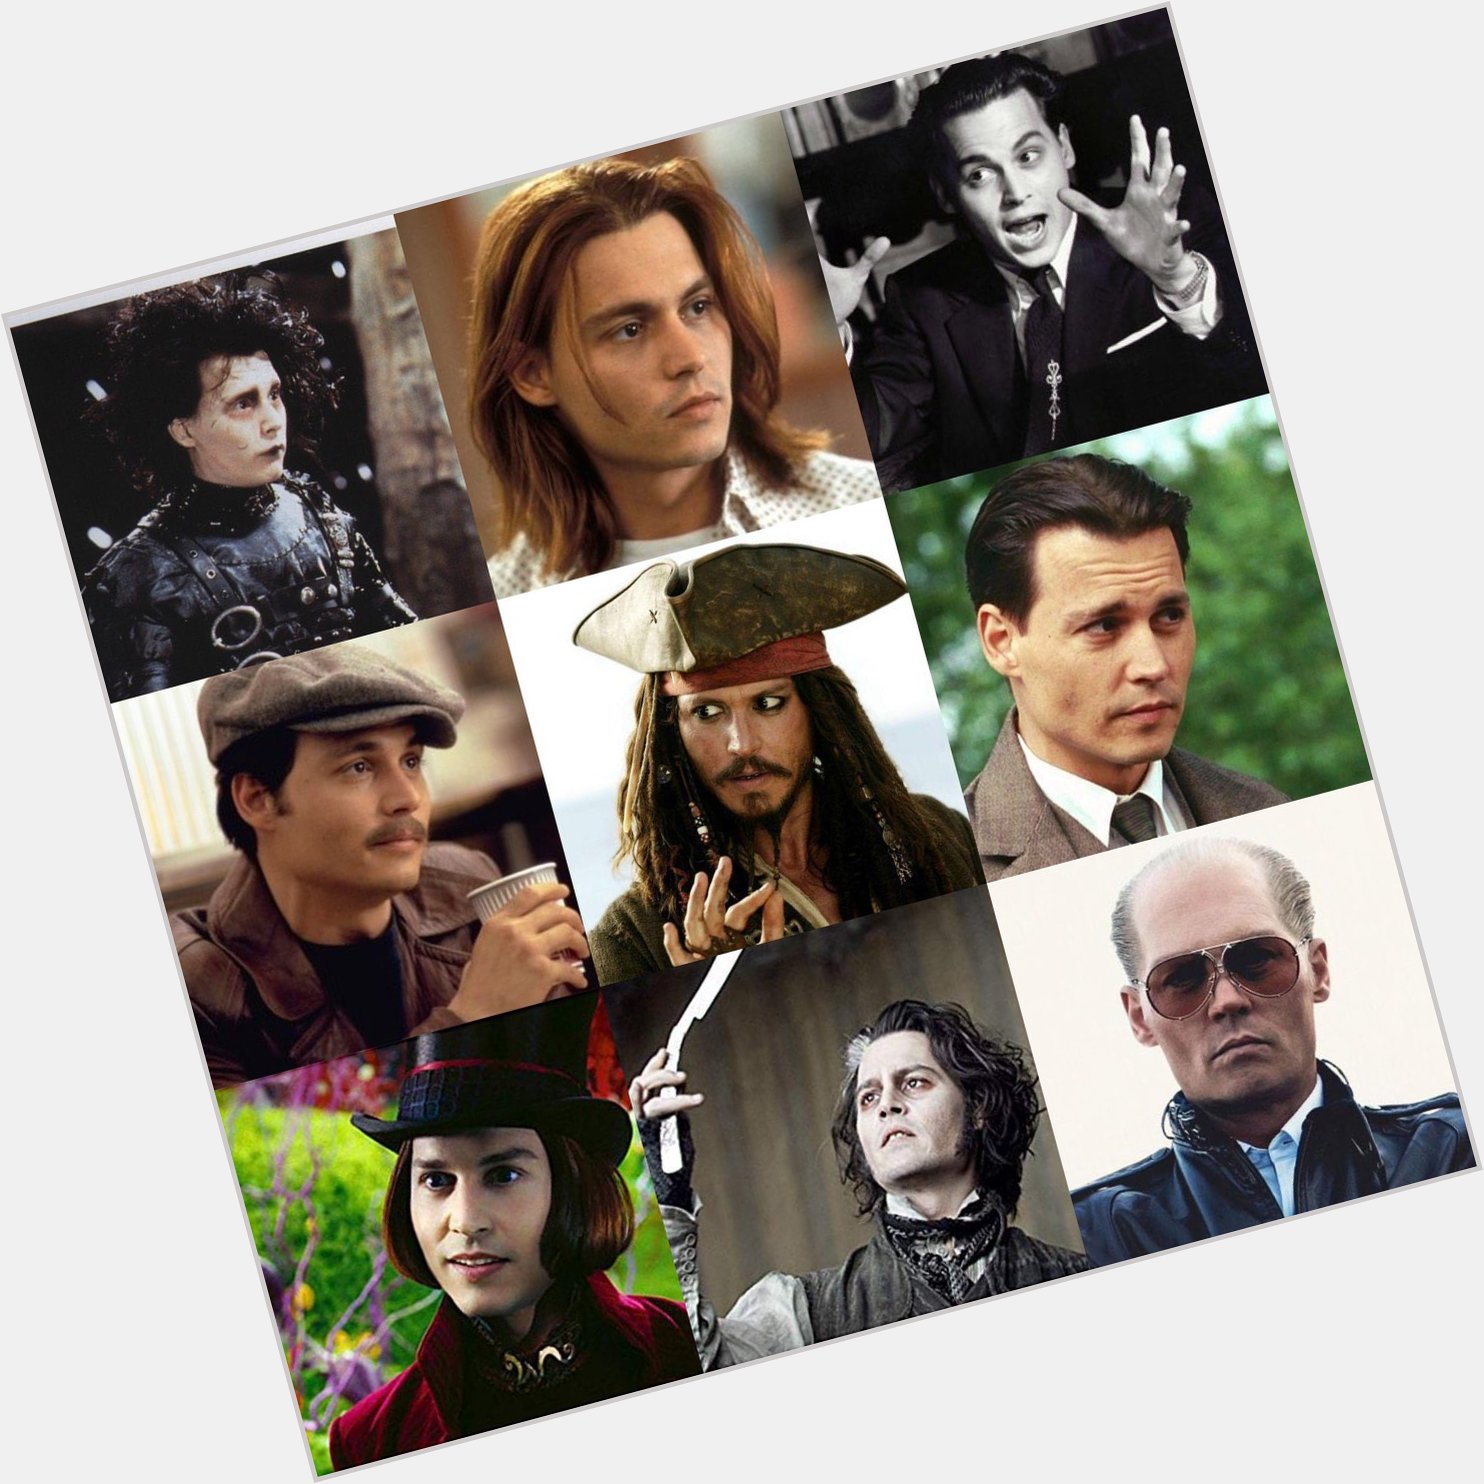 Everyone say Happy Birthday to the KING OF RANGE AND CINEMA Johnny Depp!  